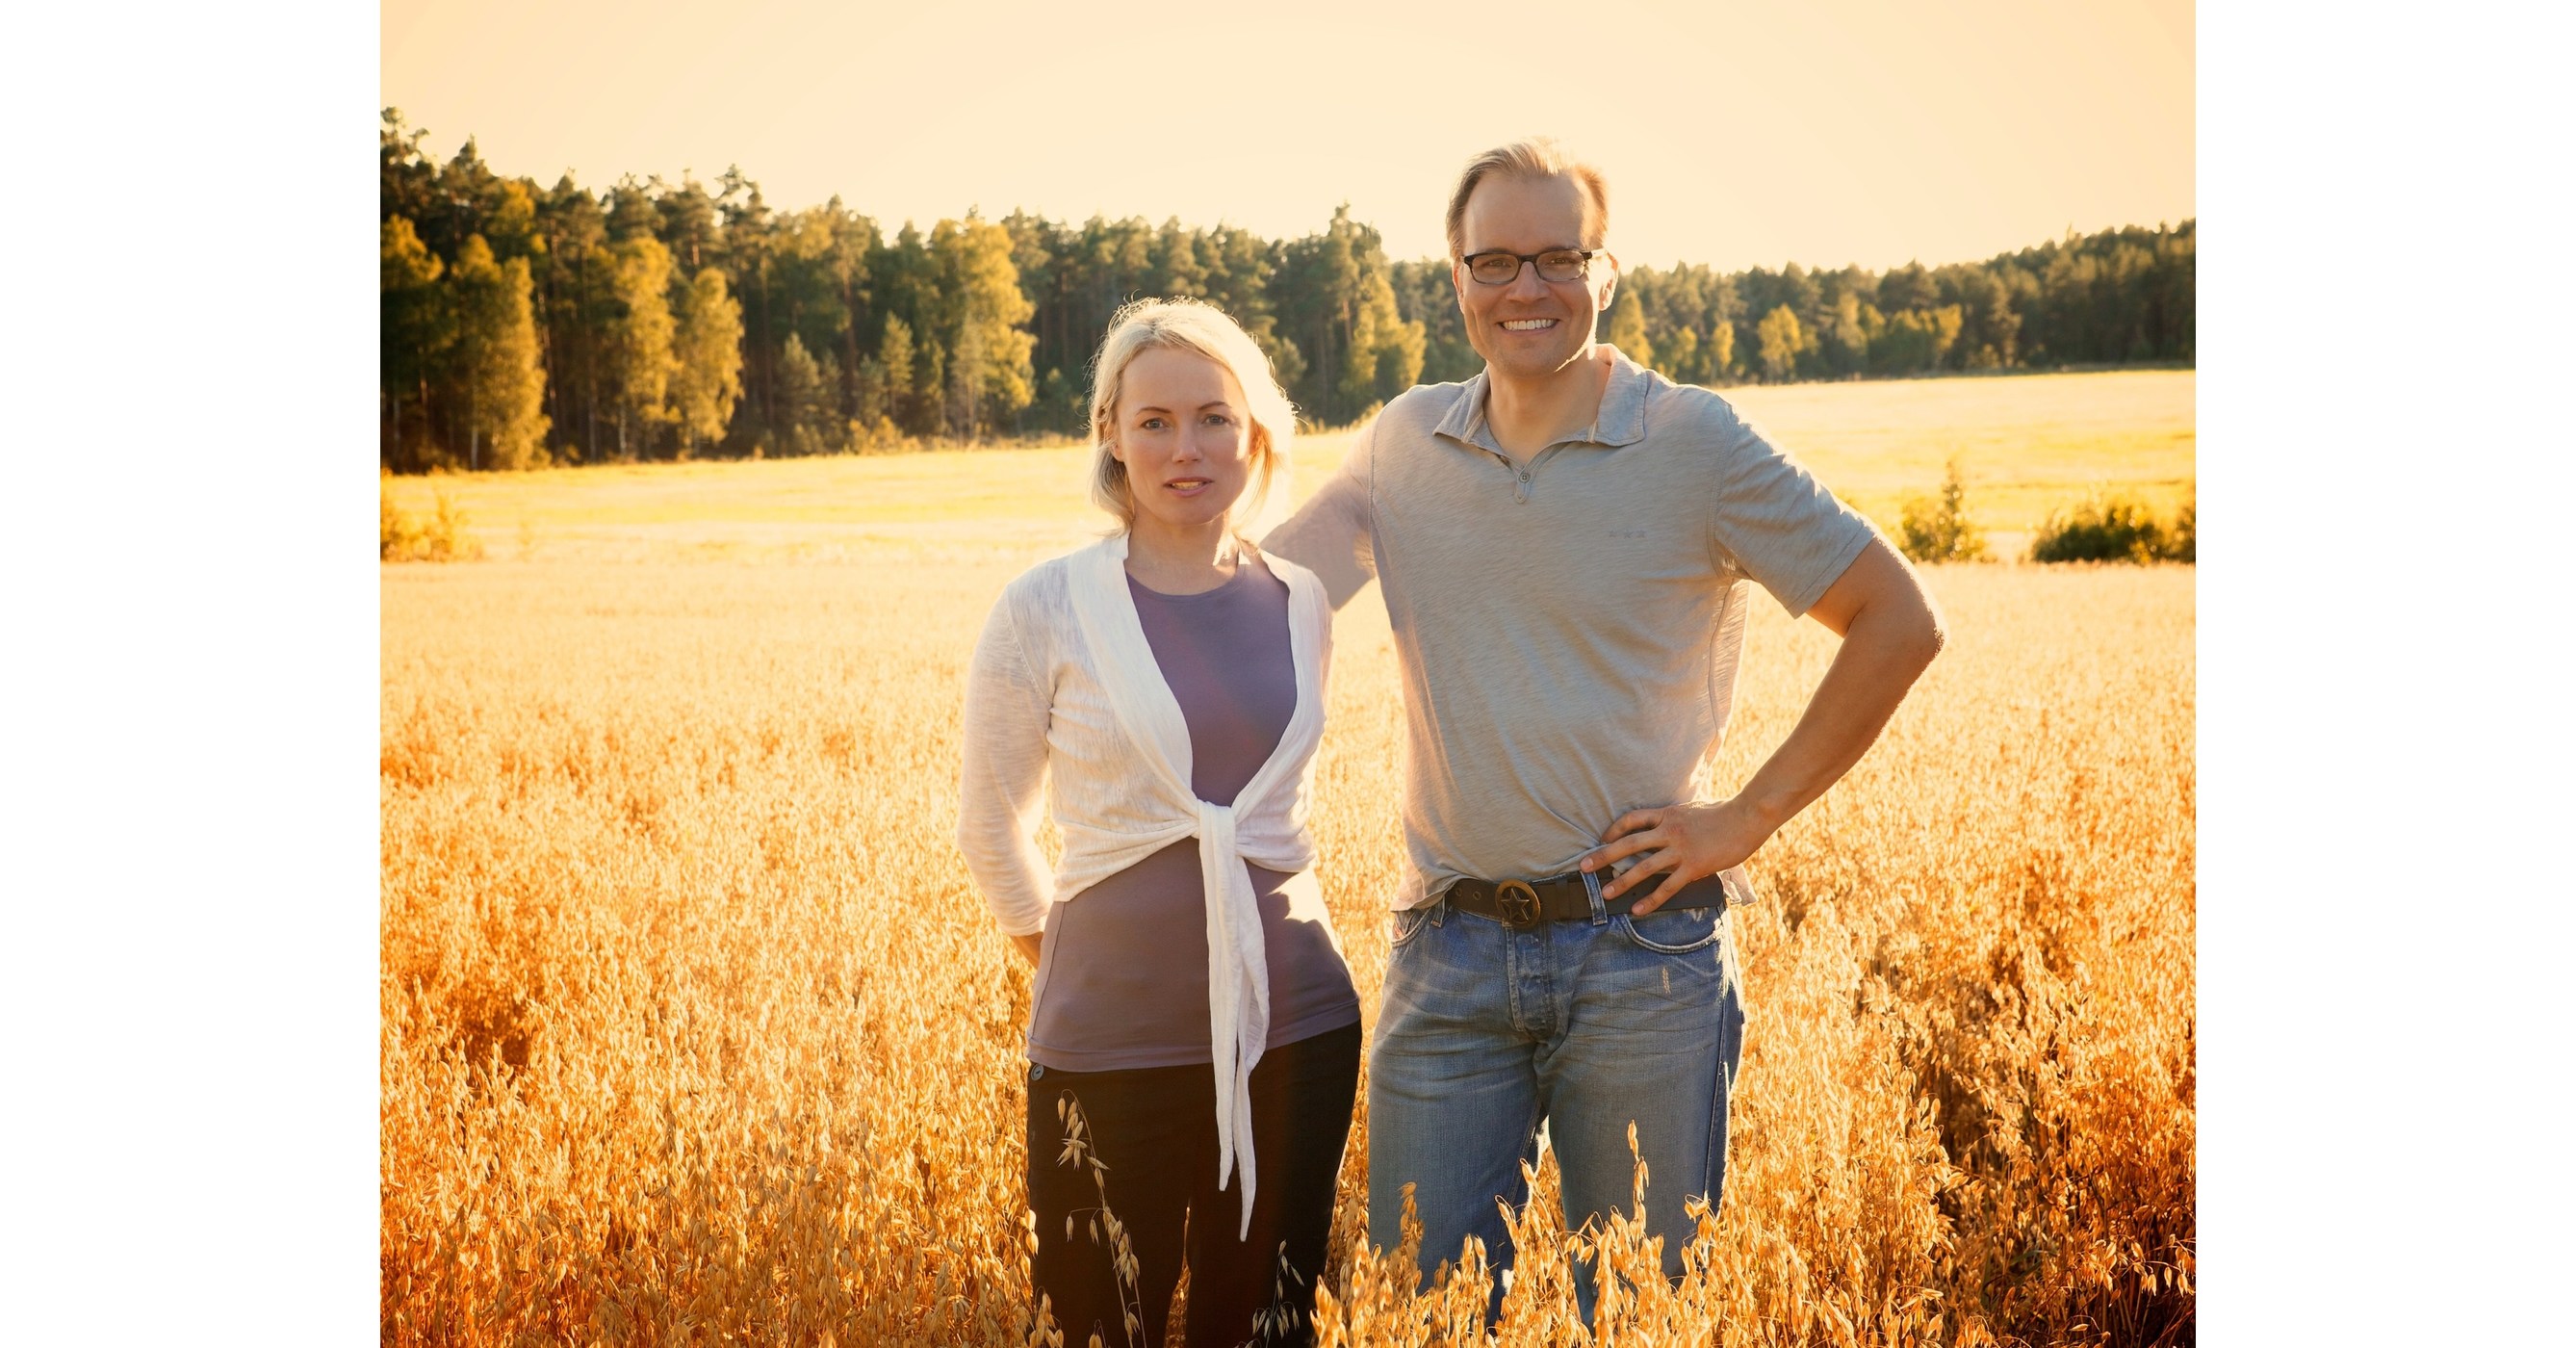 Halsa Announces Program to Convert Dairy Farmland to Grow Organic Oats in the Scandinavian Tradition - PRNewswire